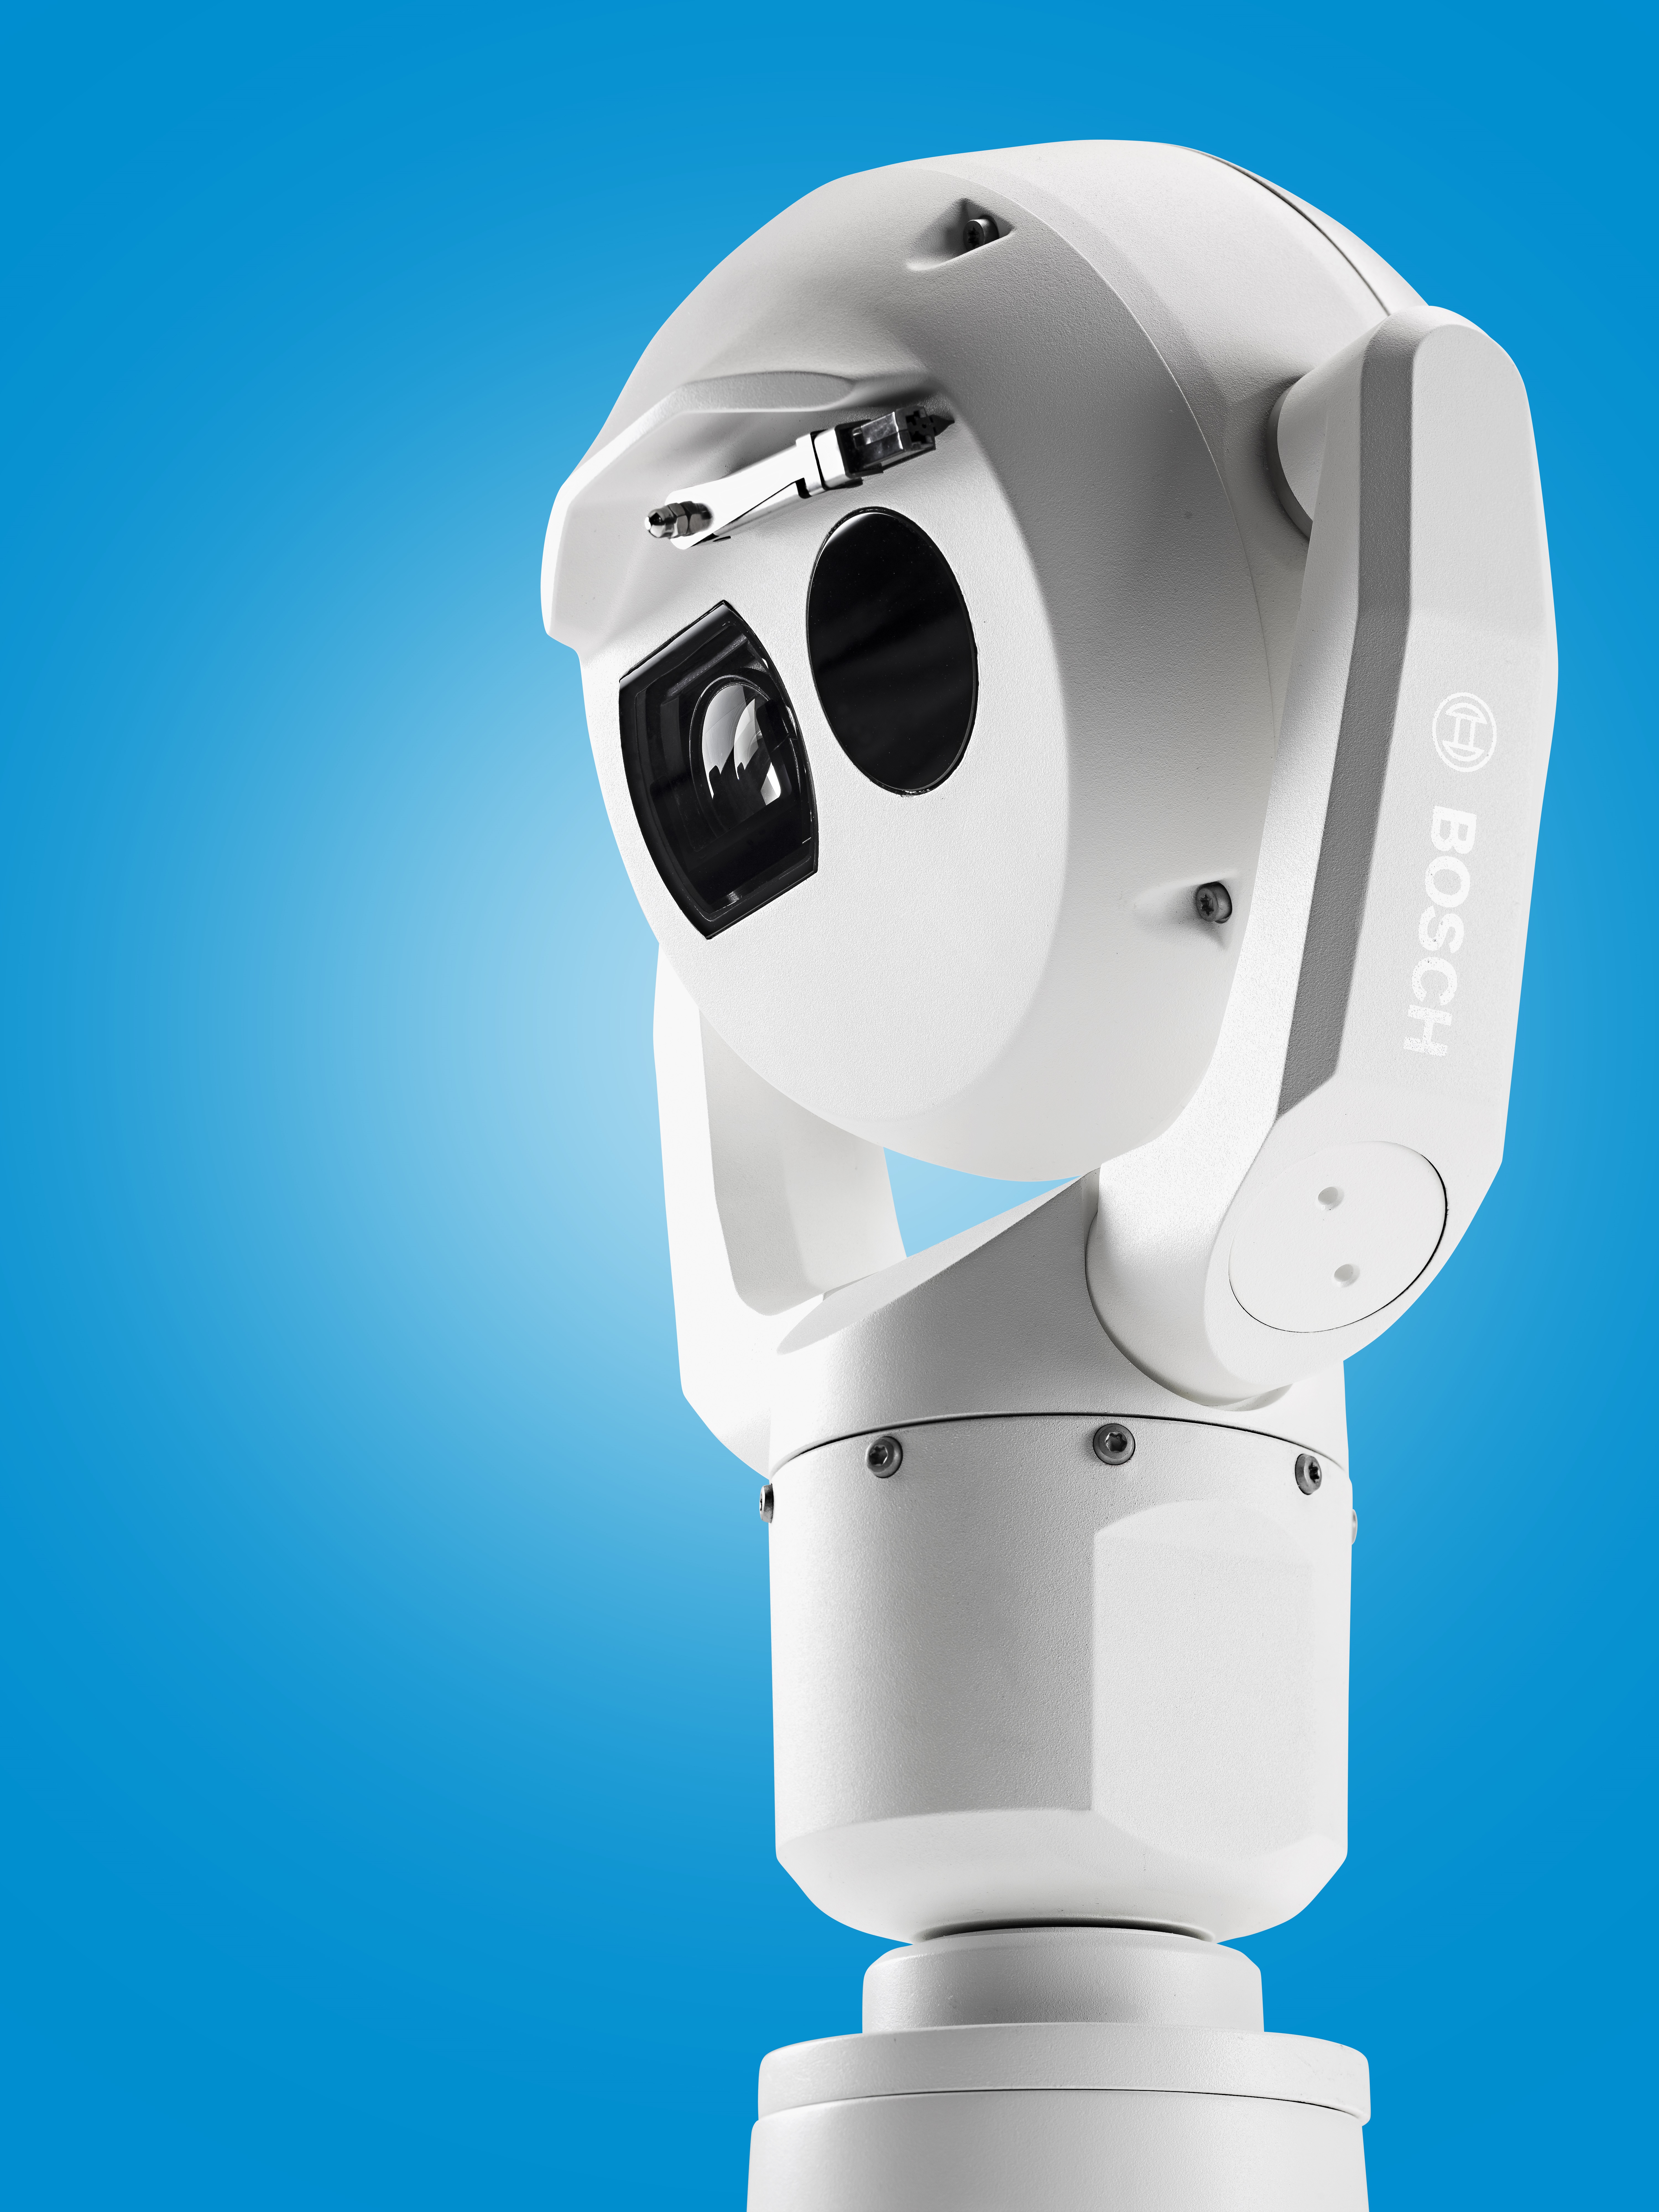 boschs robust mic ip video security cameras get even smarter